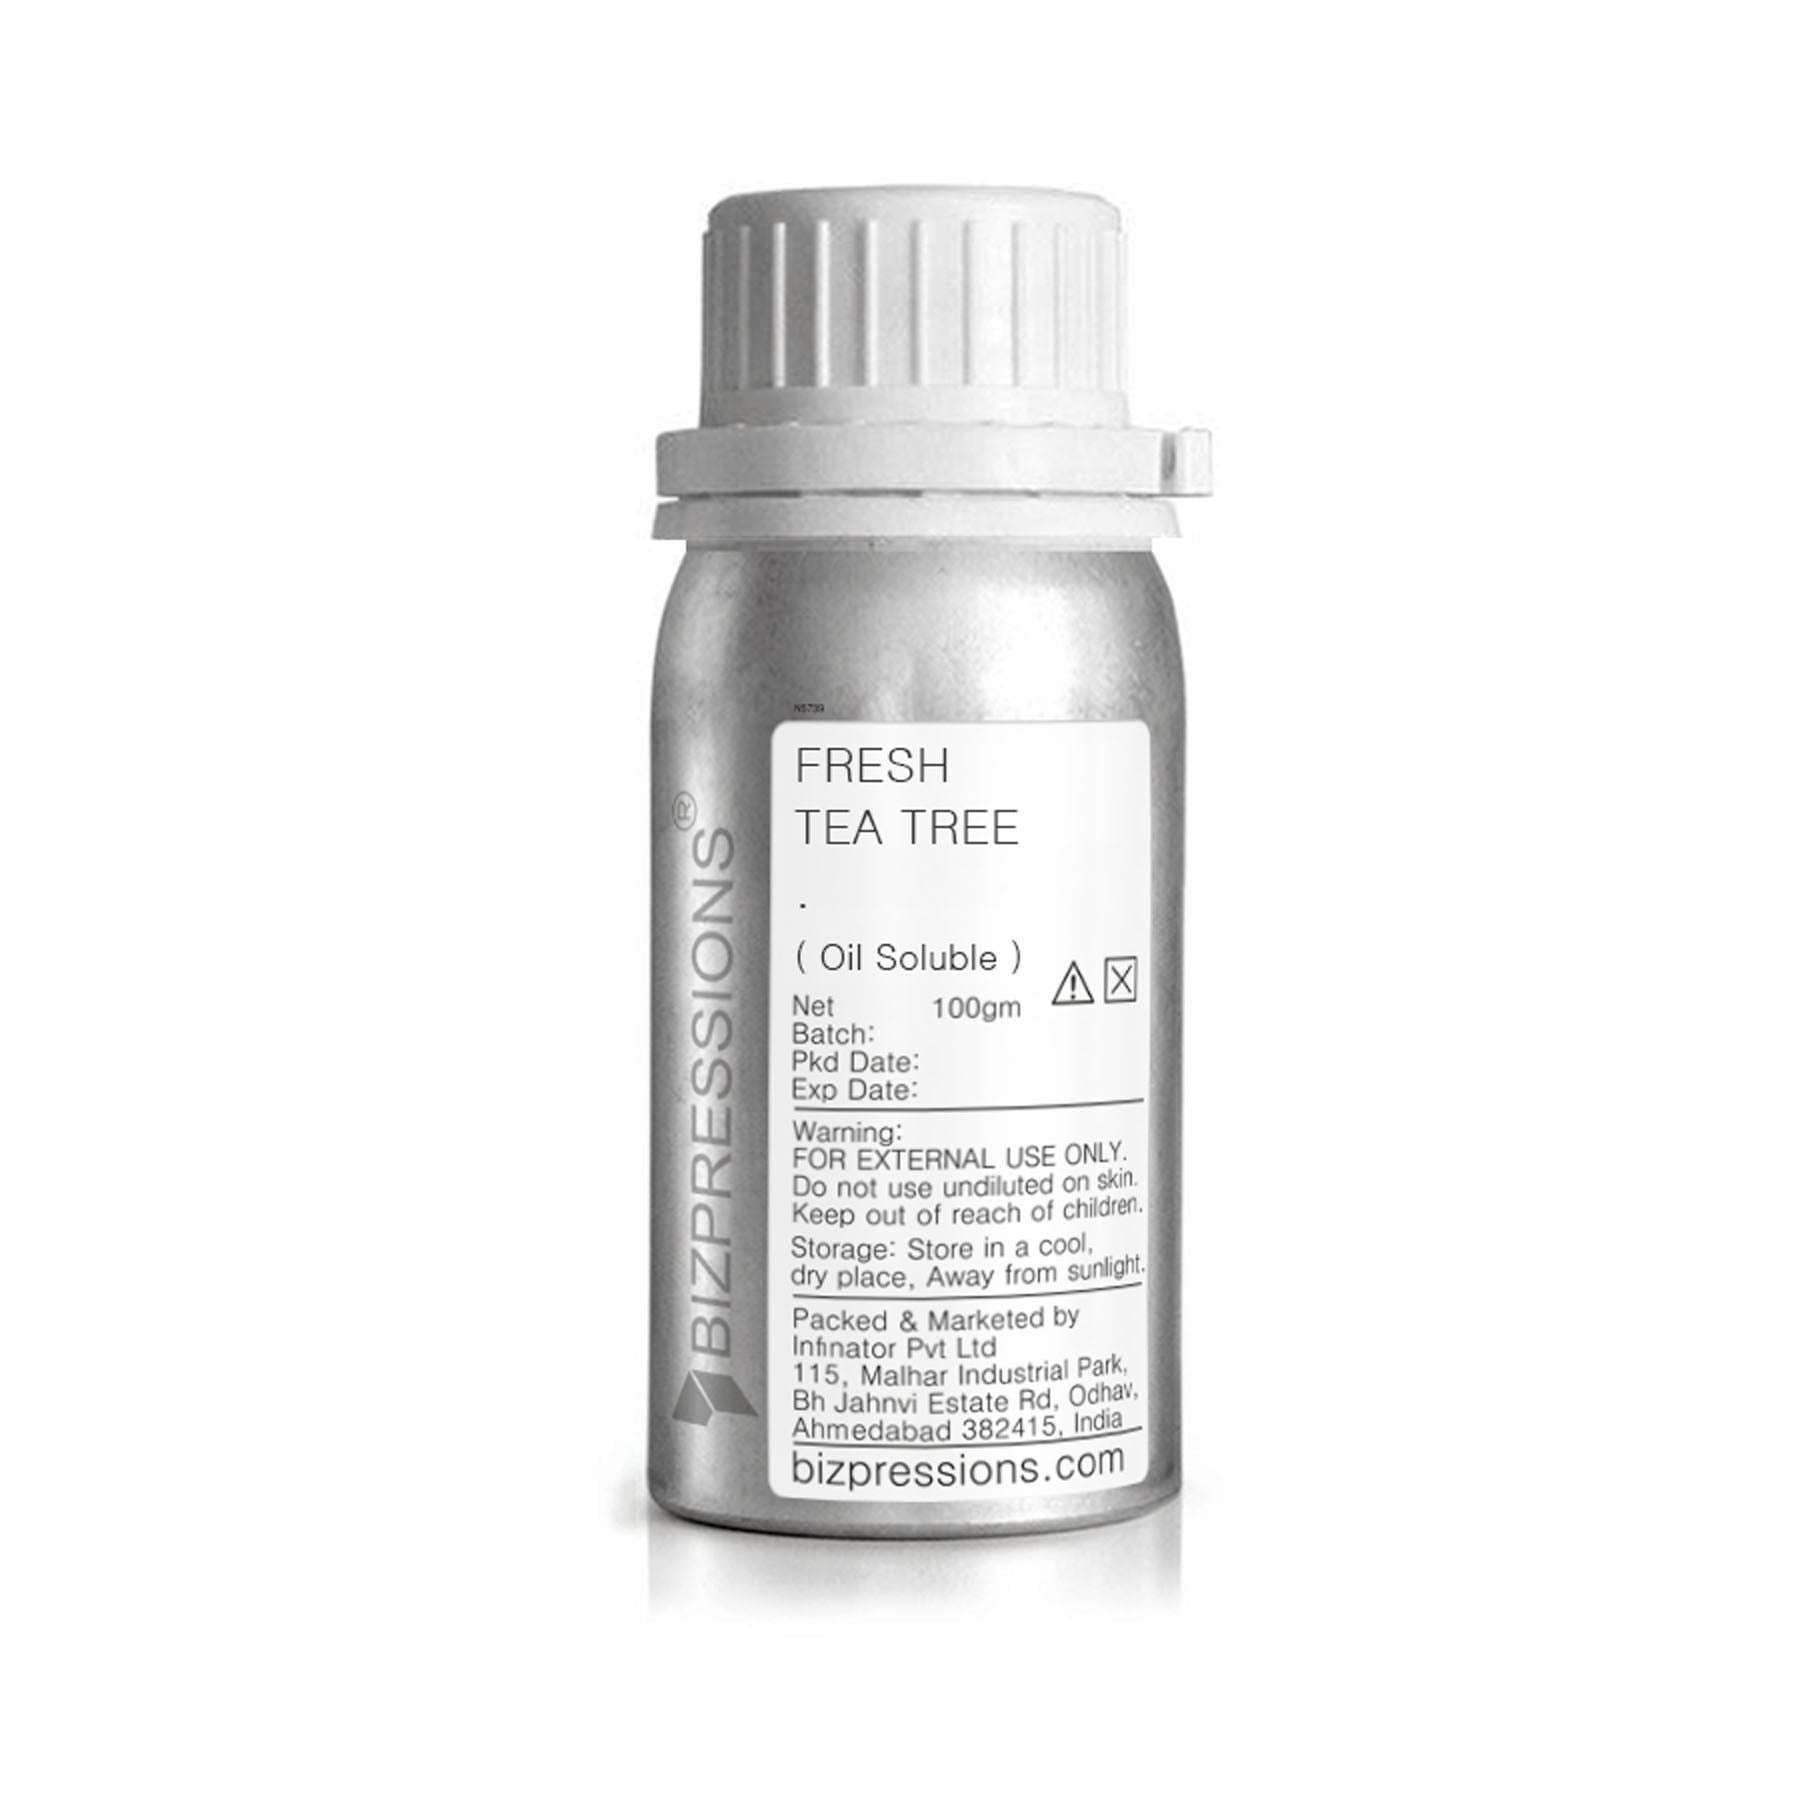 FRESH TEA TREE - Fragrance ( Oil Soluble ) - 100 gm